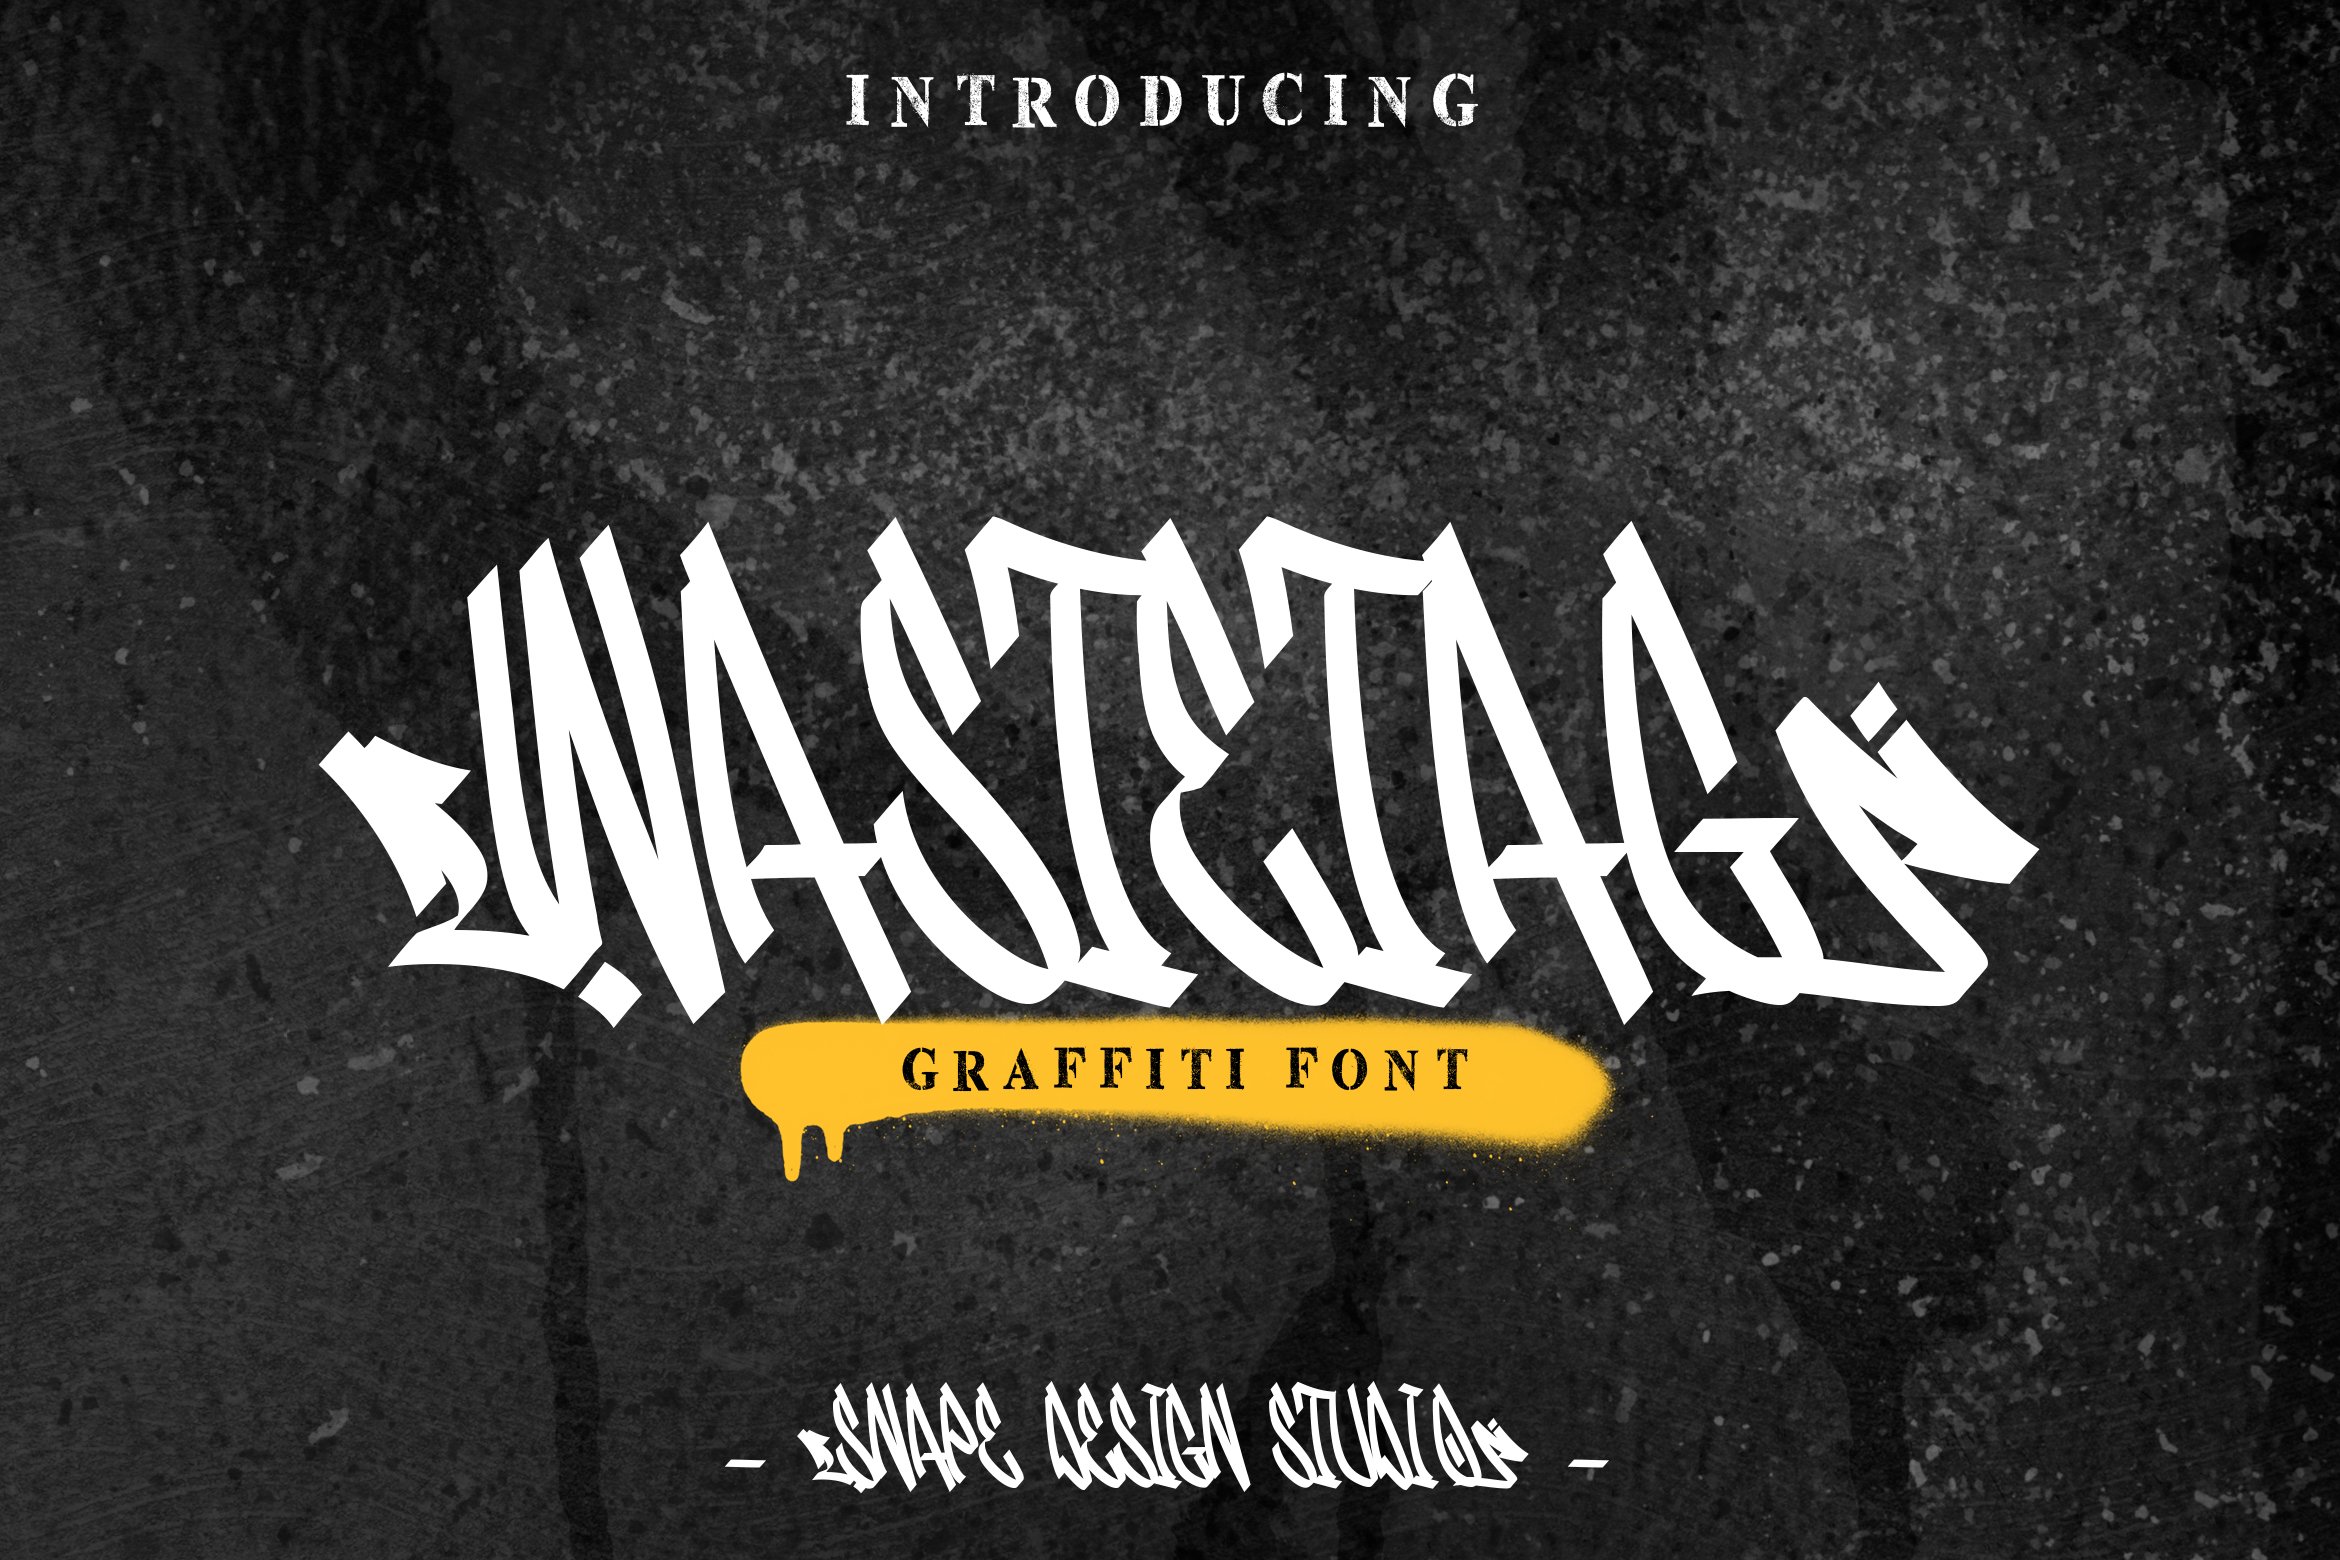 Wastetag - Graffiti Font cover image.